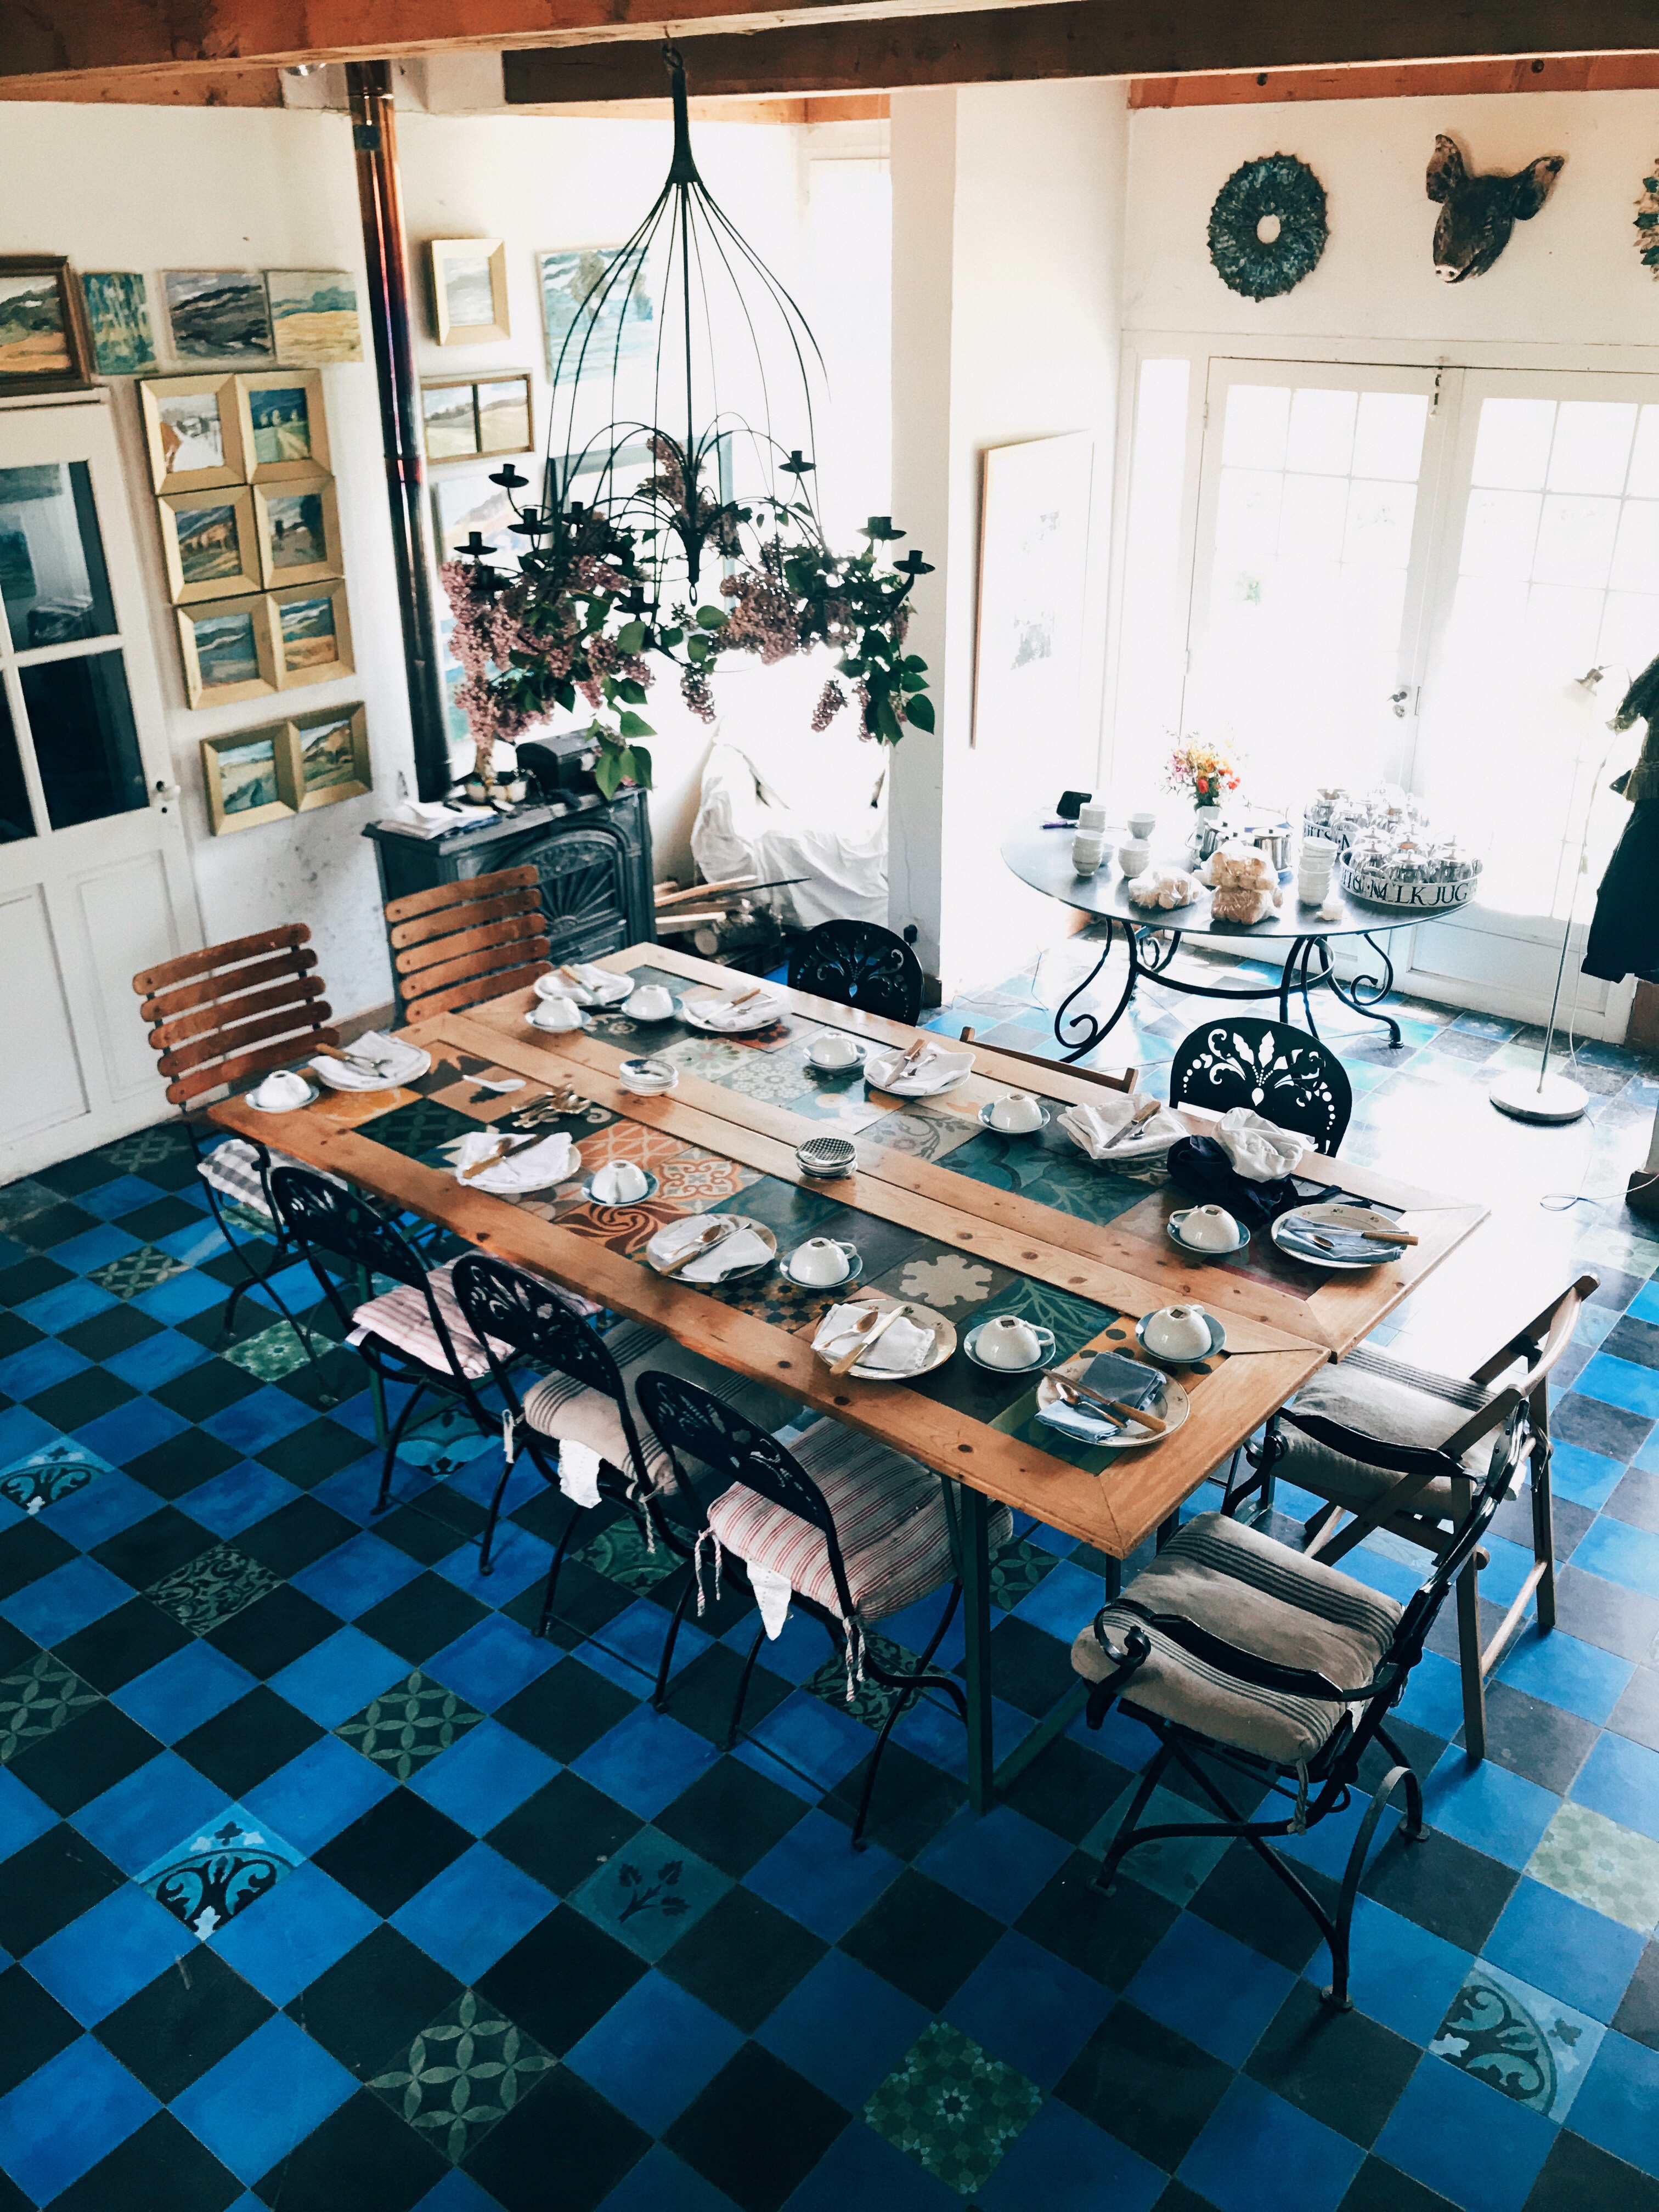 Dinning Room Tile, St Rémy au Bois France / Travel RG Daily Blog